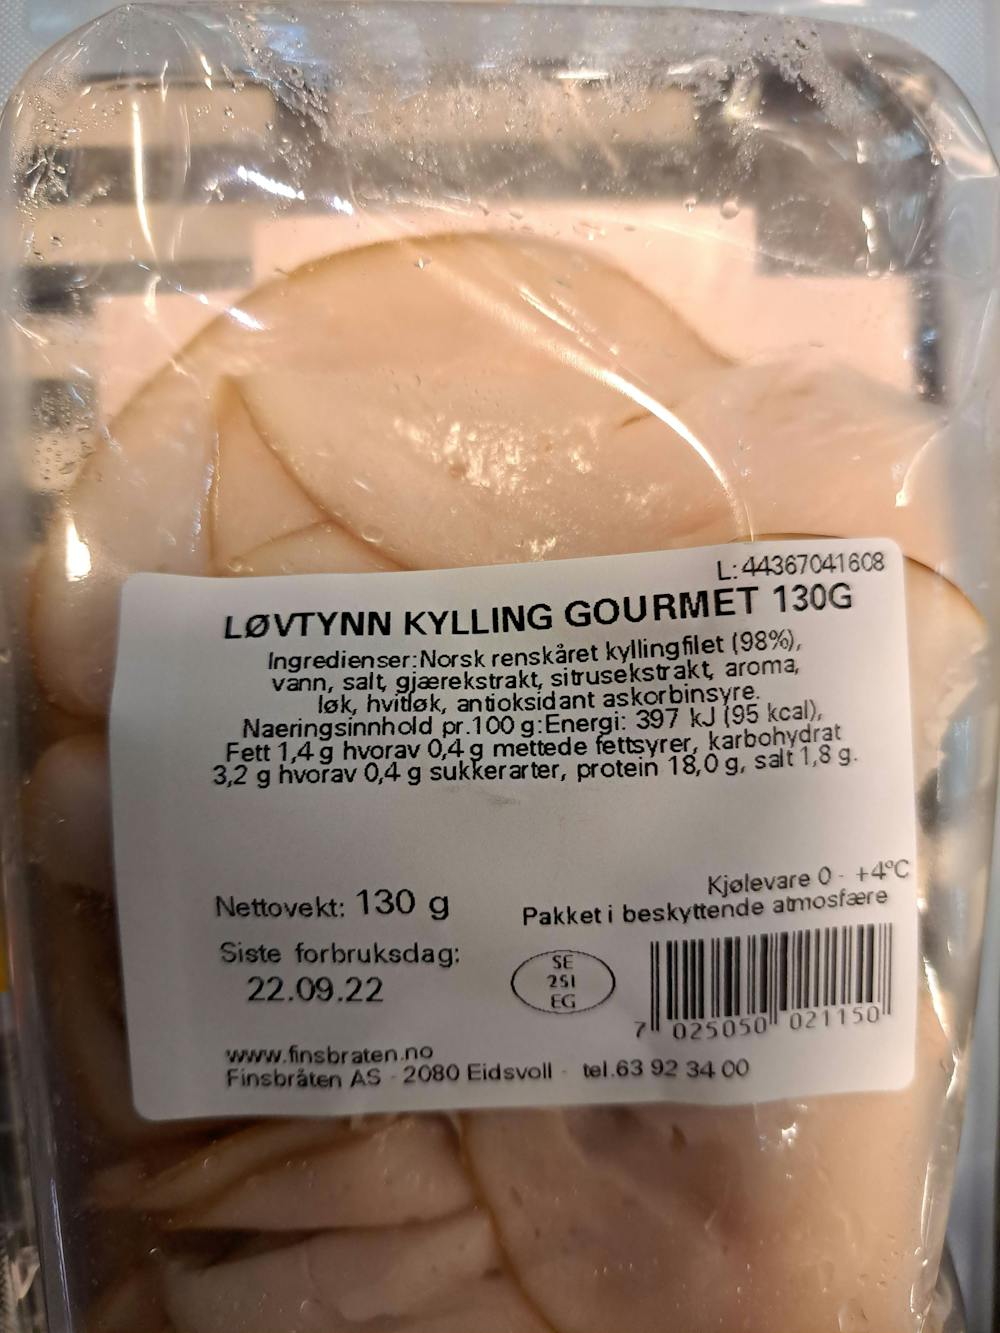 Ingredienslisten til Løvtynn kyllingfilet, Finsbråten